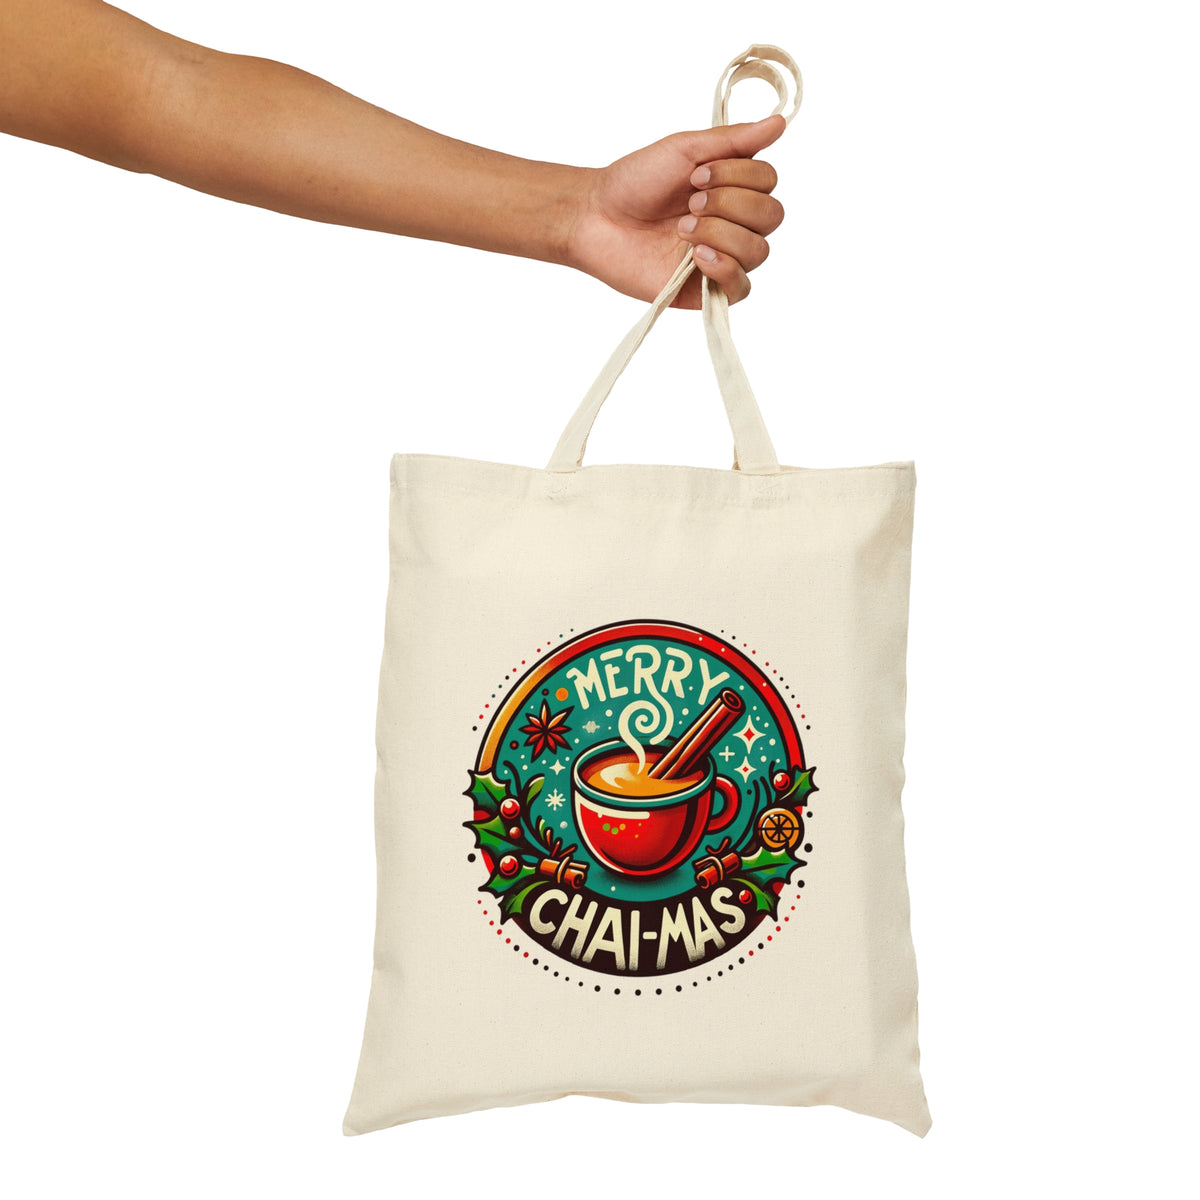 Merry Chai-mas Chai Lover Christmas Tote | Chai Tea Gift Bag | Christmas Chai Tote Bag | Cotton Canvas Tote Bag